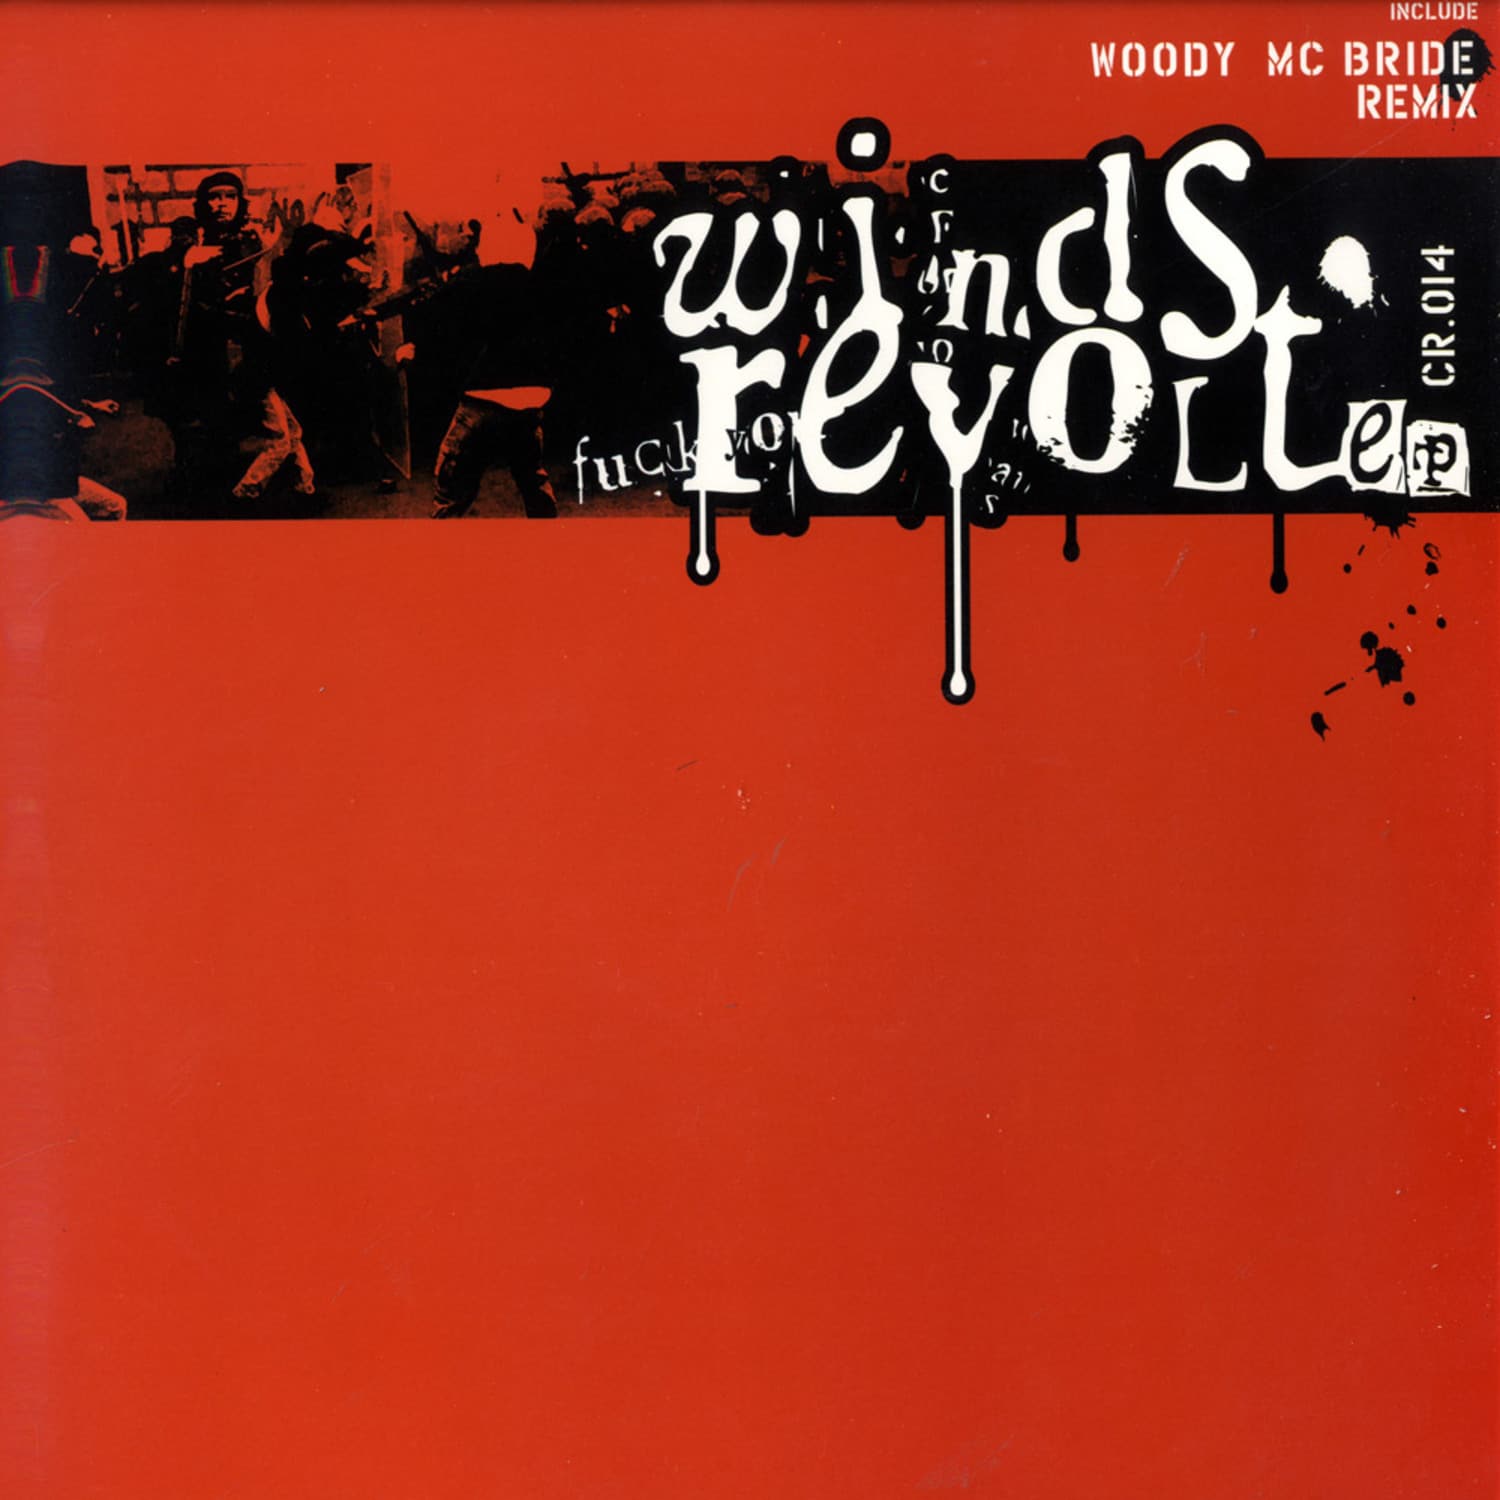 Winds - Revolt EP / Woody McBride RMX